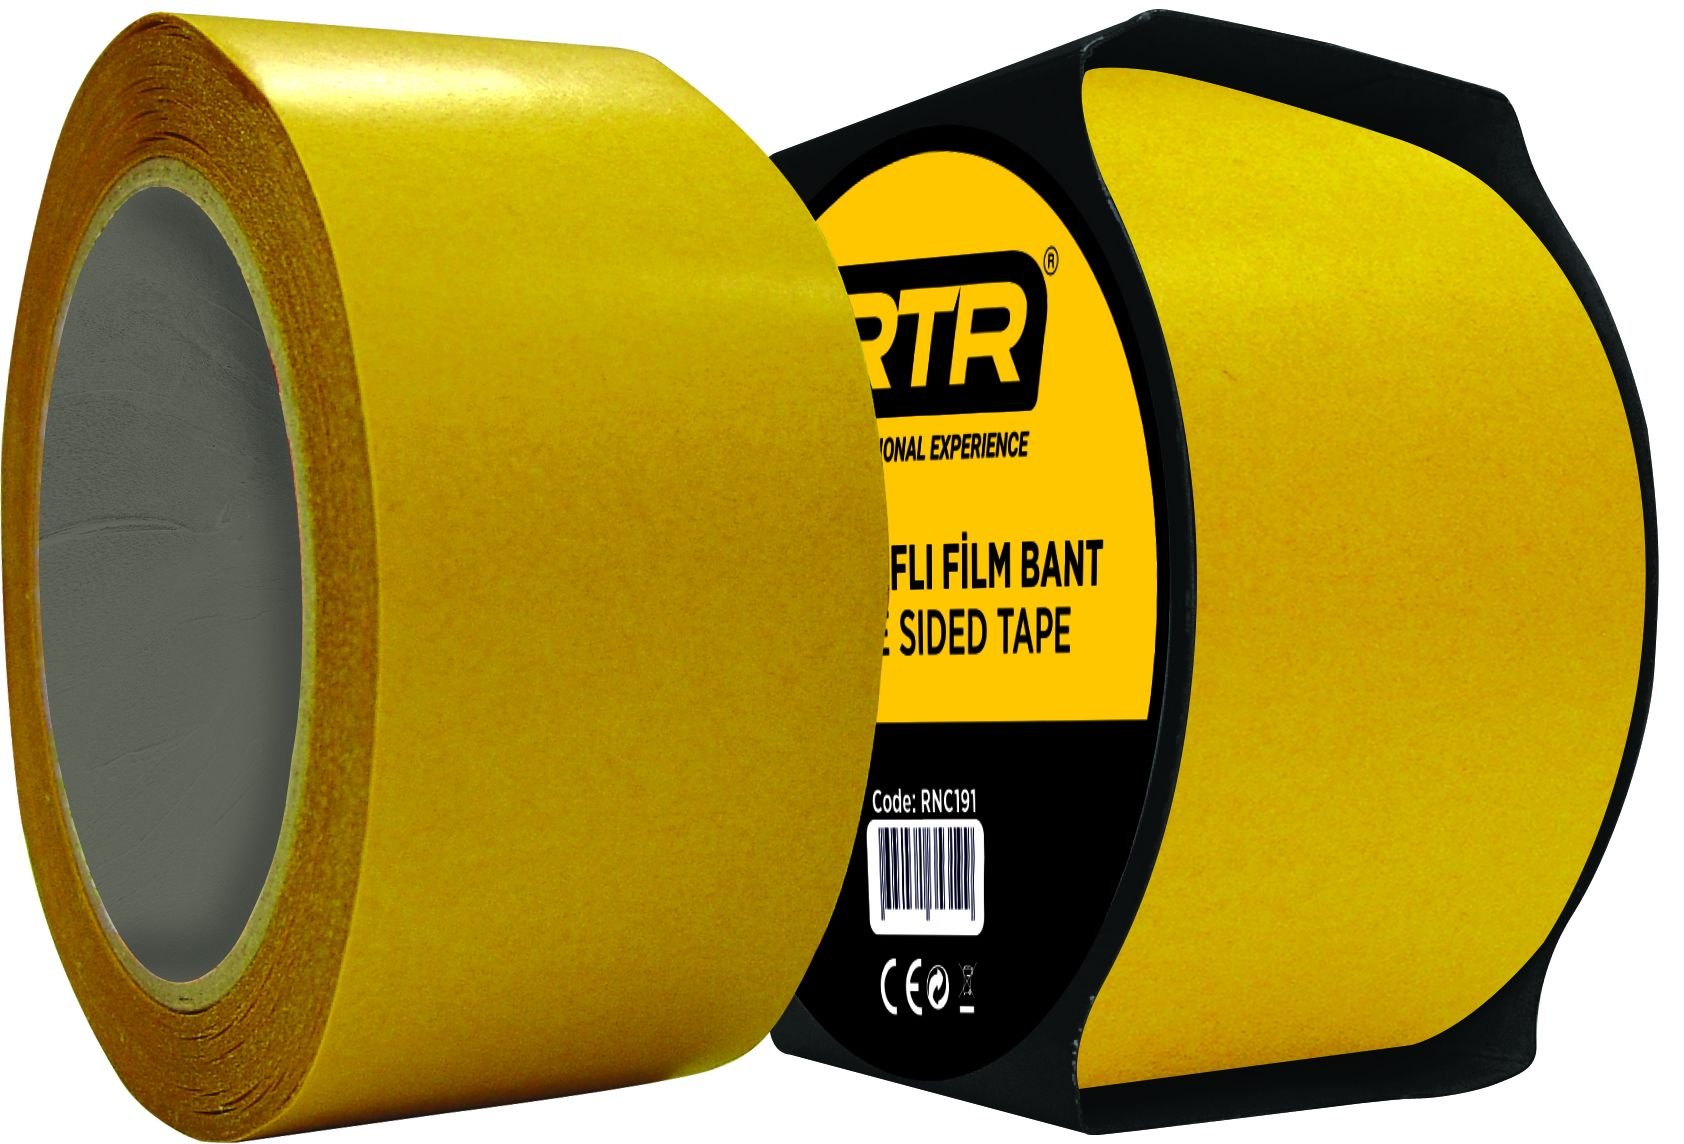 RTR (RNS3625) 36mm 25mt ÇİFT TARAFLI FİLM BANT (1 Adet)